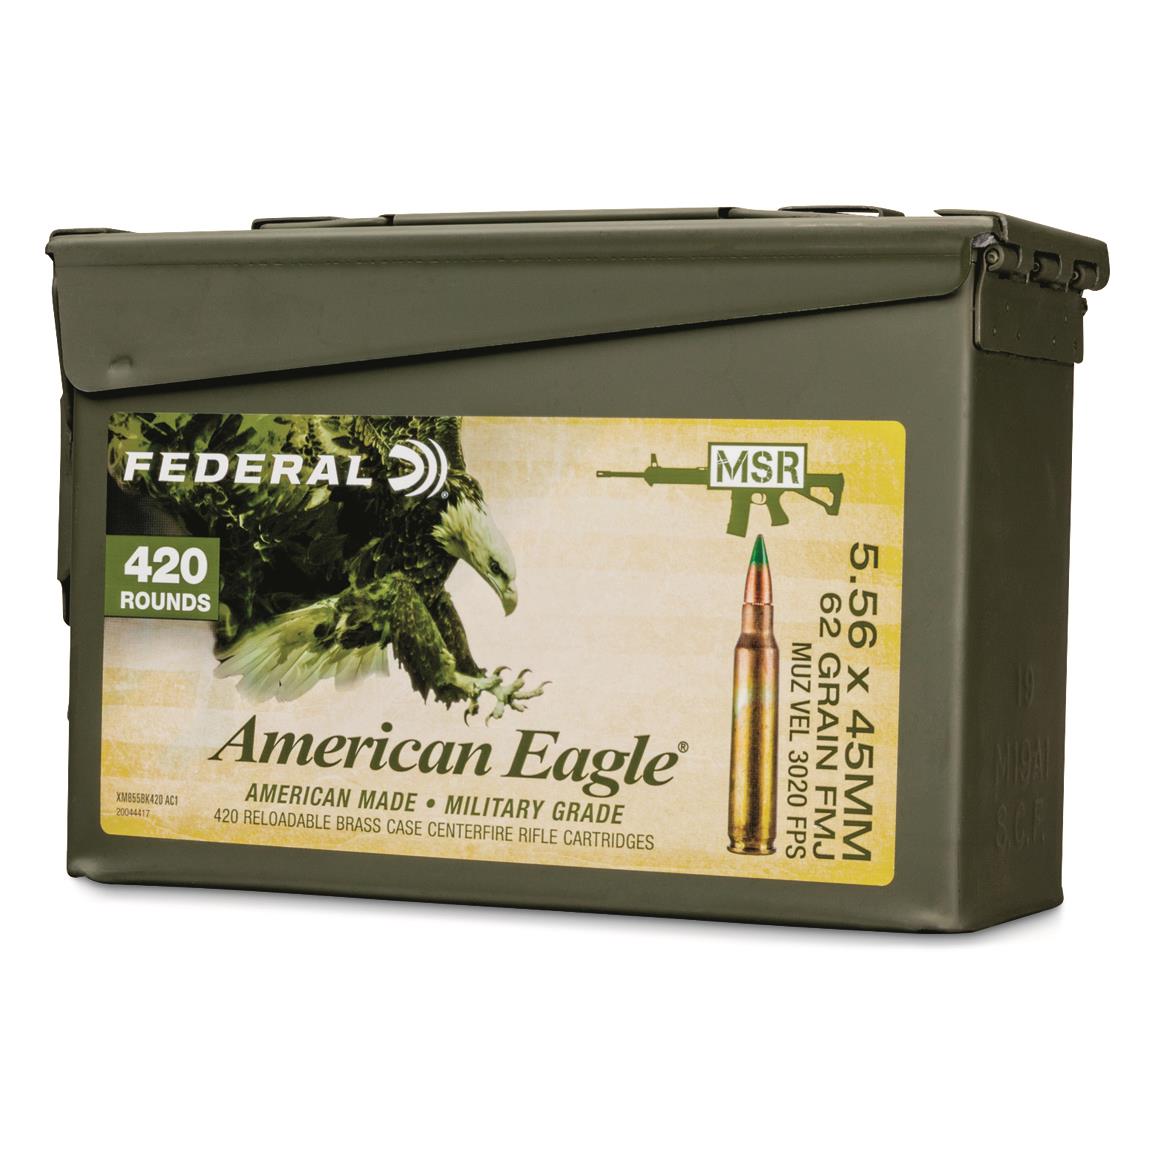 Federal American Eagle M855 Green Tip, 5.56x45mm NATO, FMJ, 62 Grain, 420 Rounds